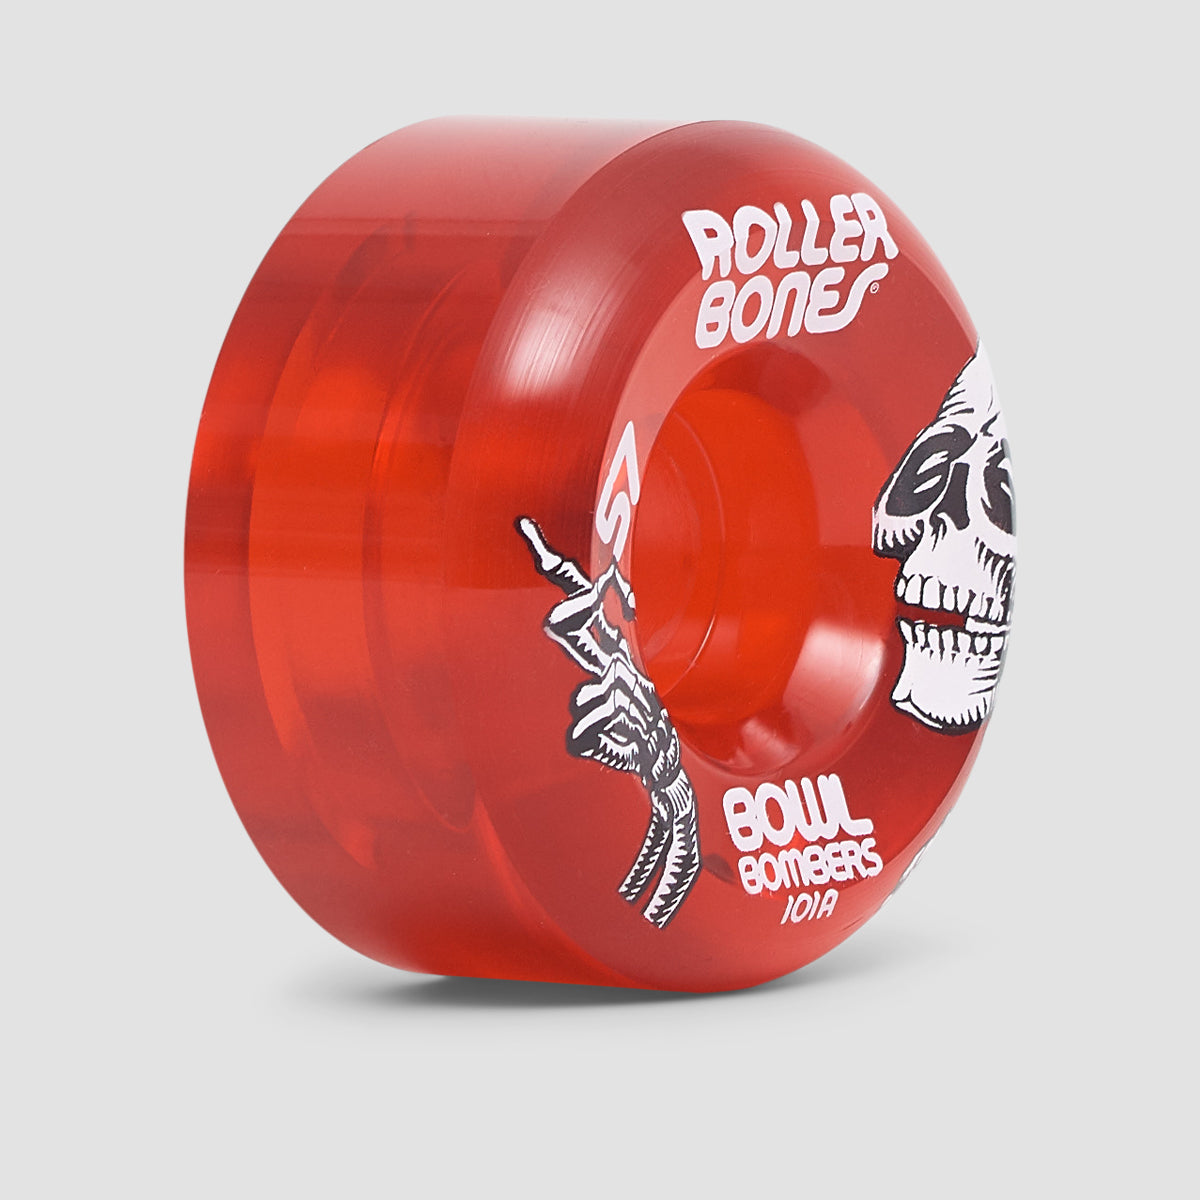 Rollerbones Bowl Bombers 101a Quad Wheels x8 Red 57mm